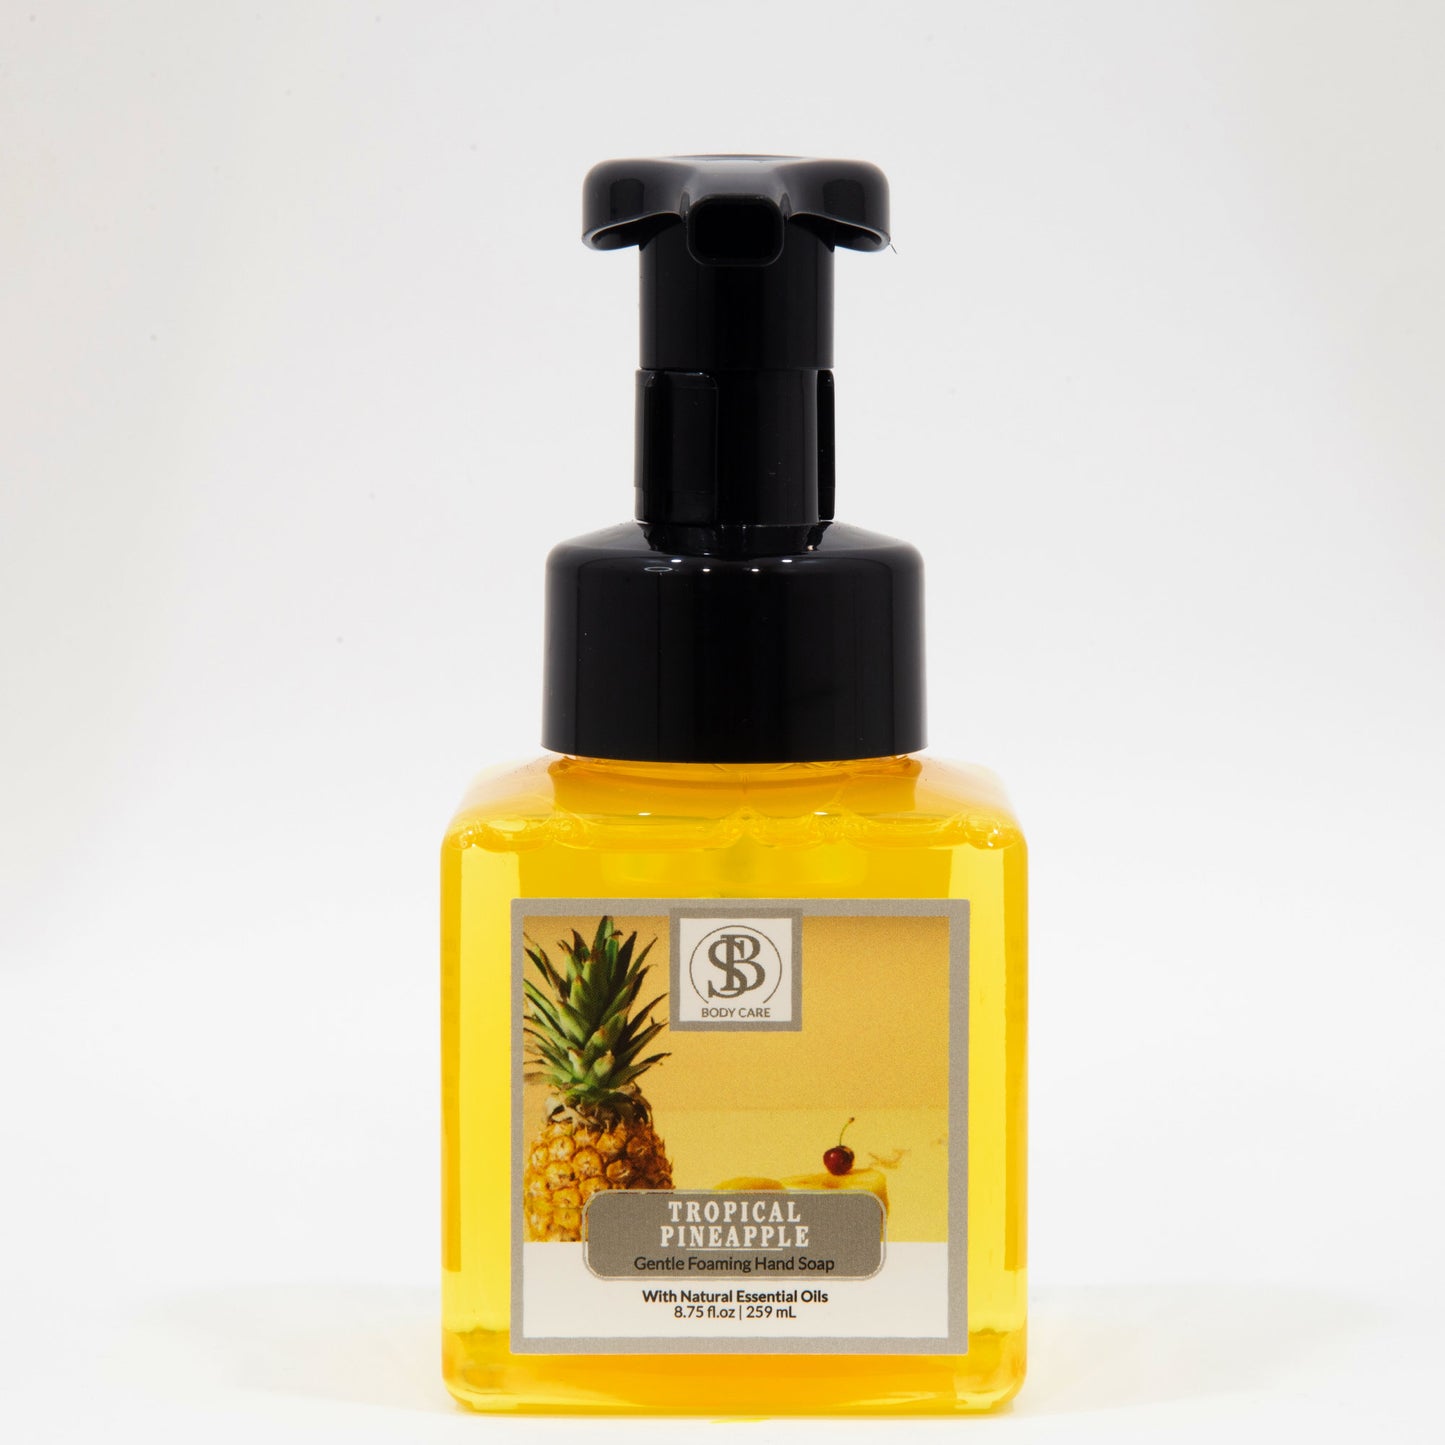 Tropical Pineapple Gentle Foaming Hand Soap